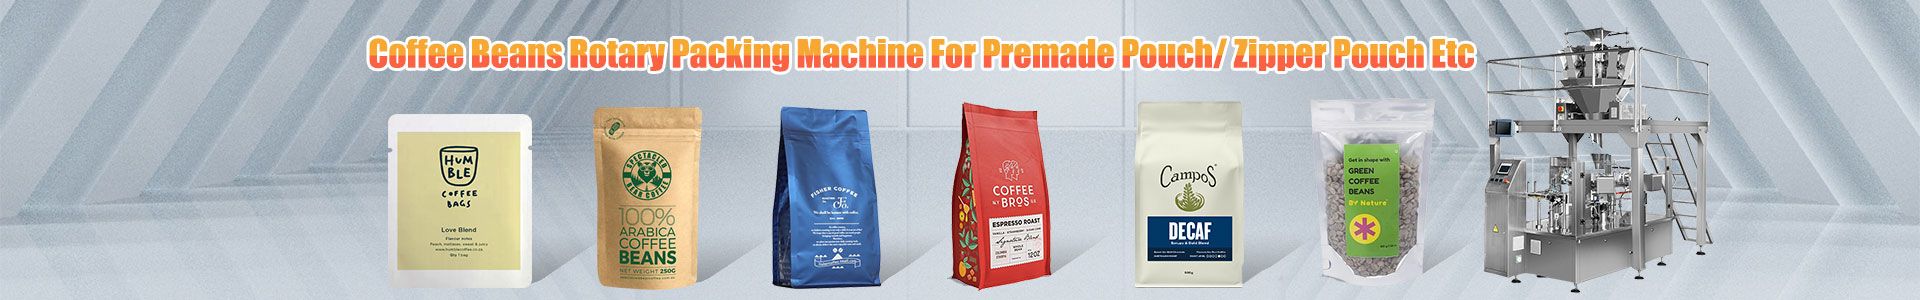 coffee beans packing machine